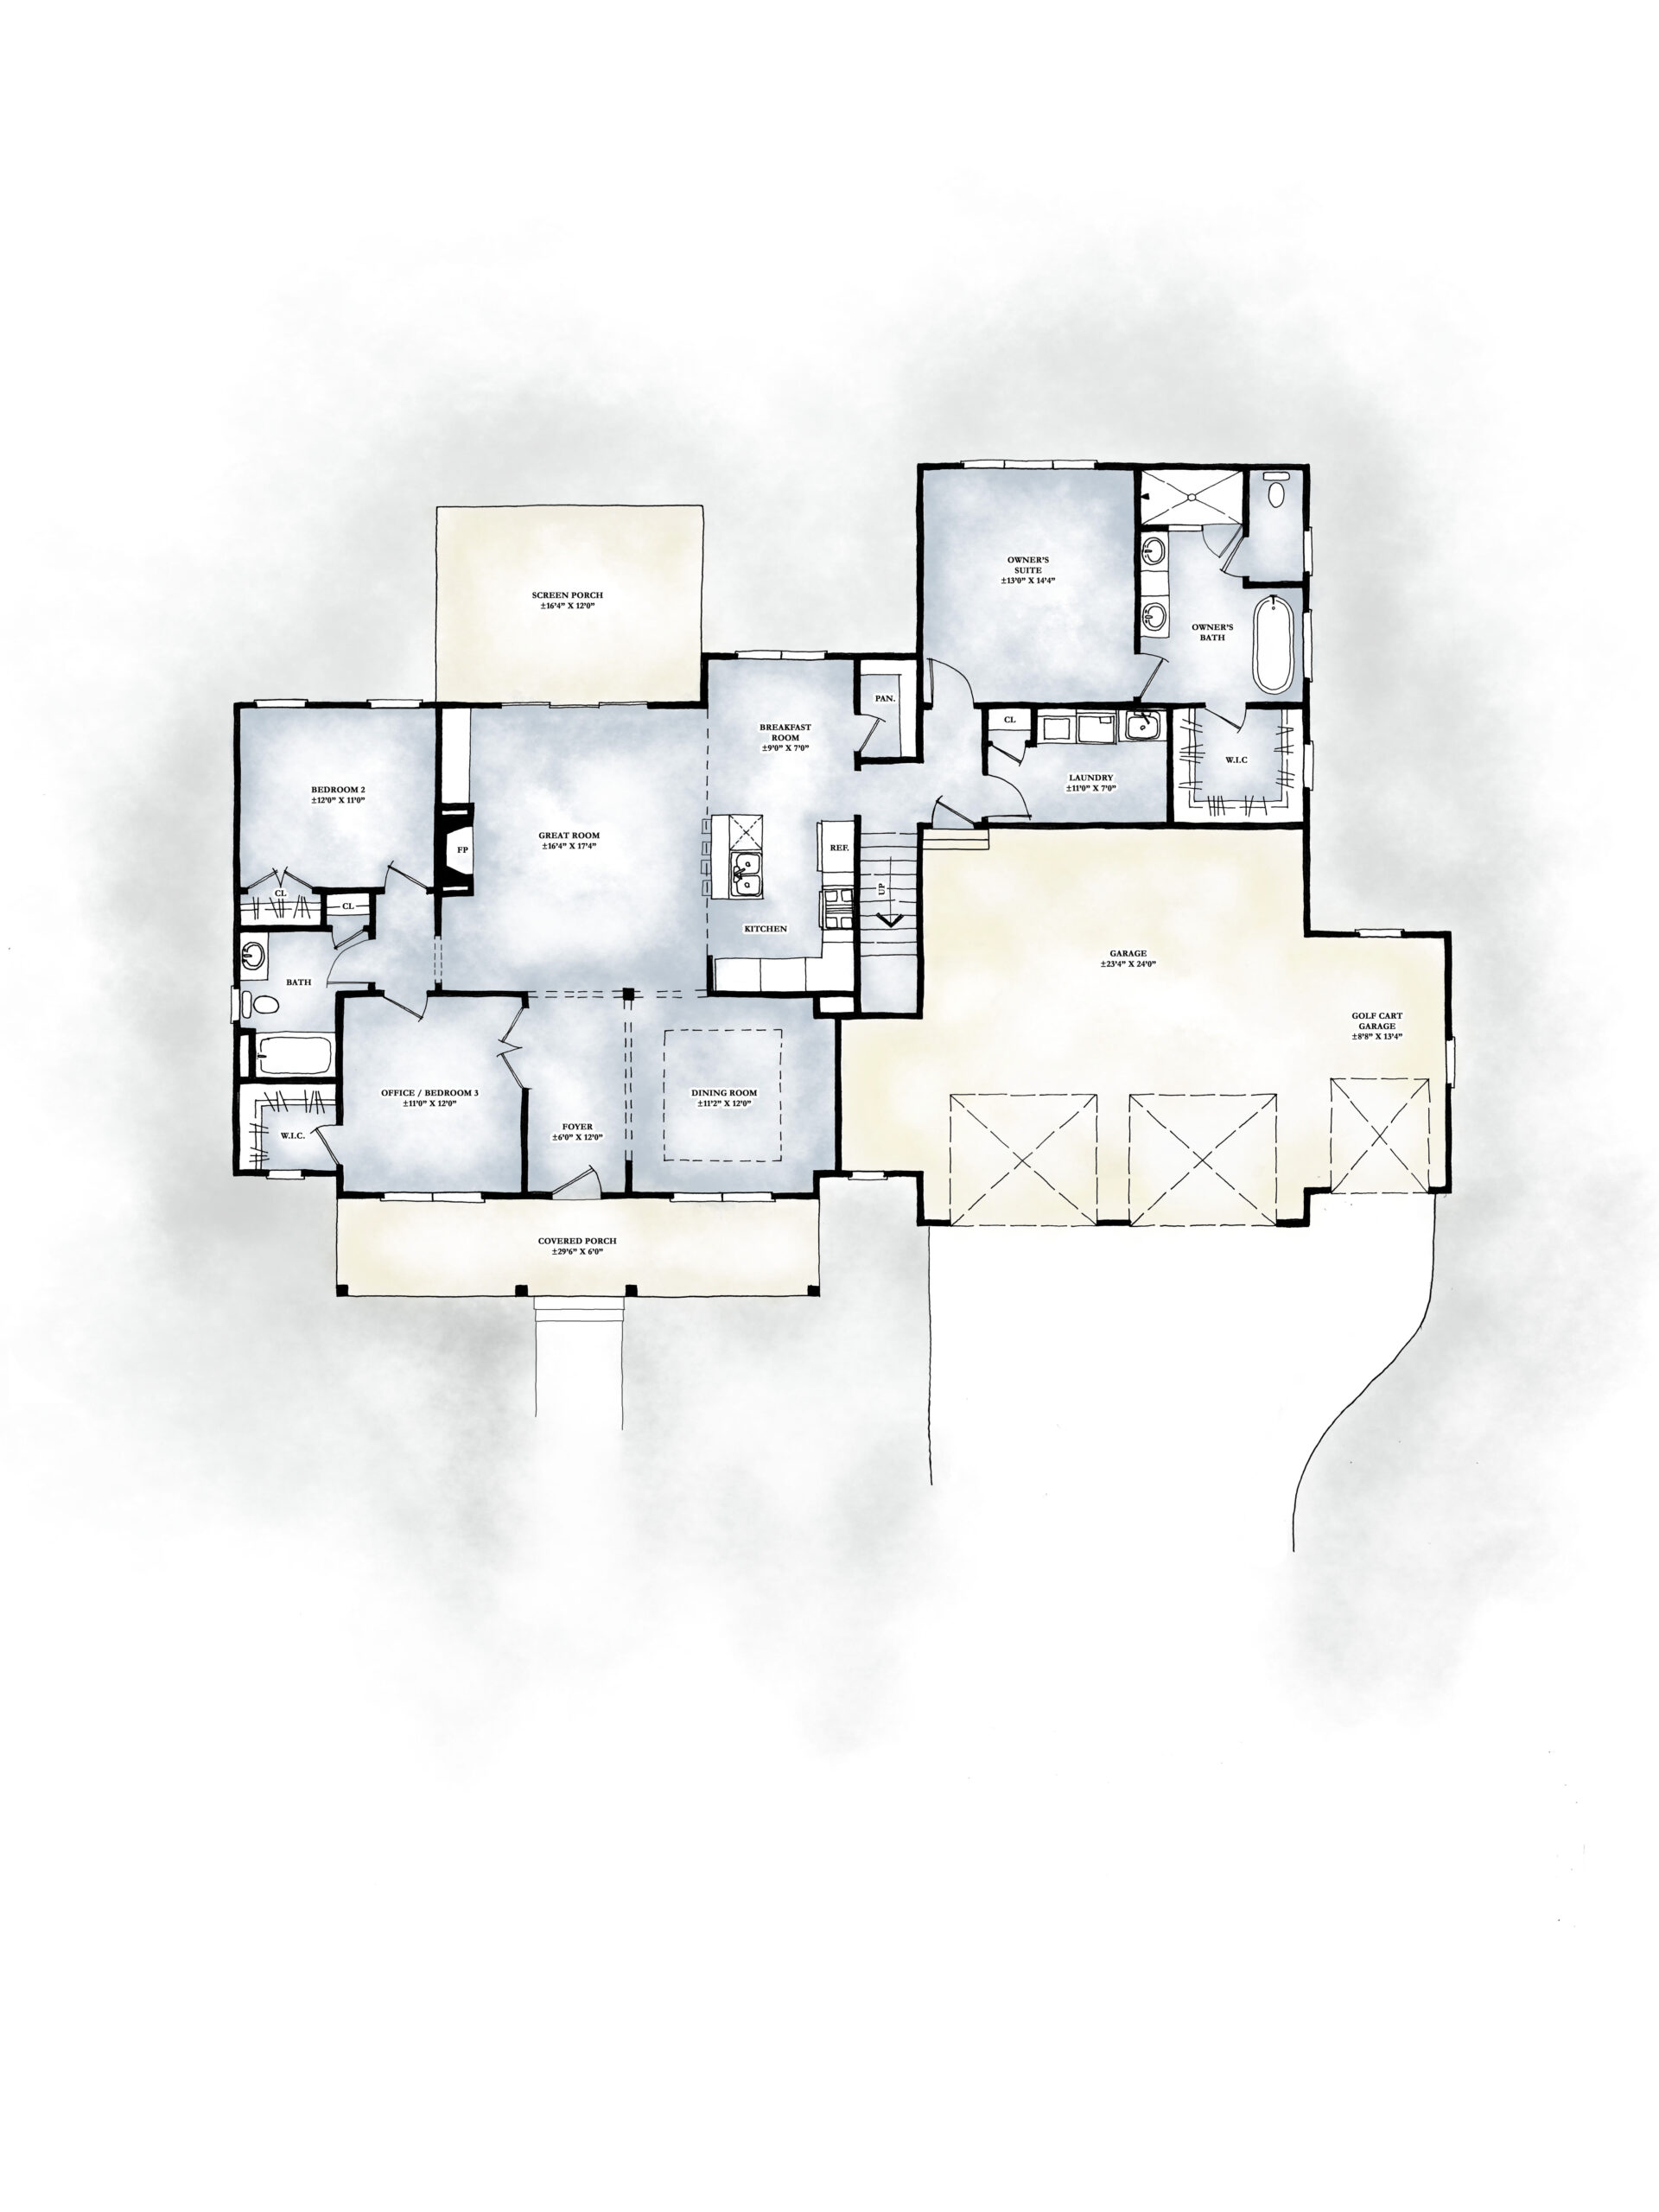 Lot 427 main level floorplan